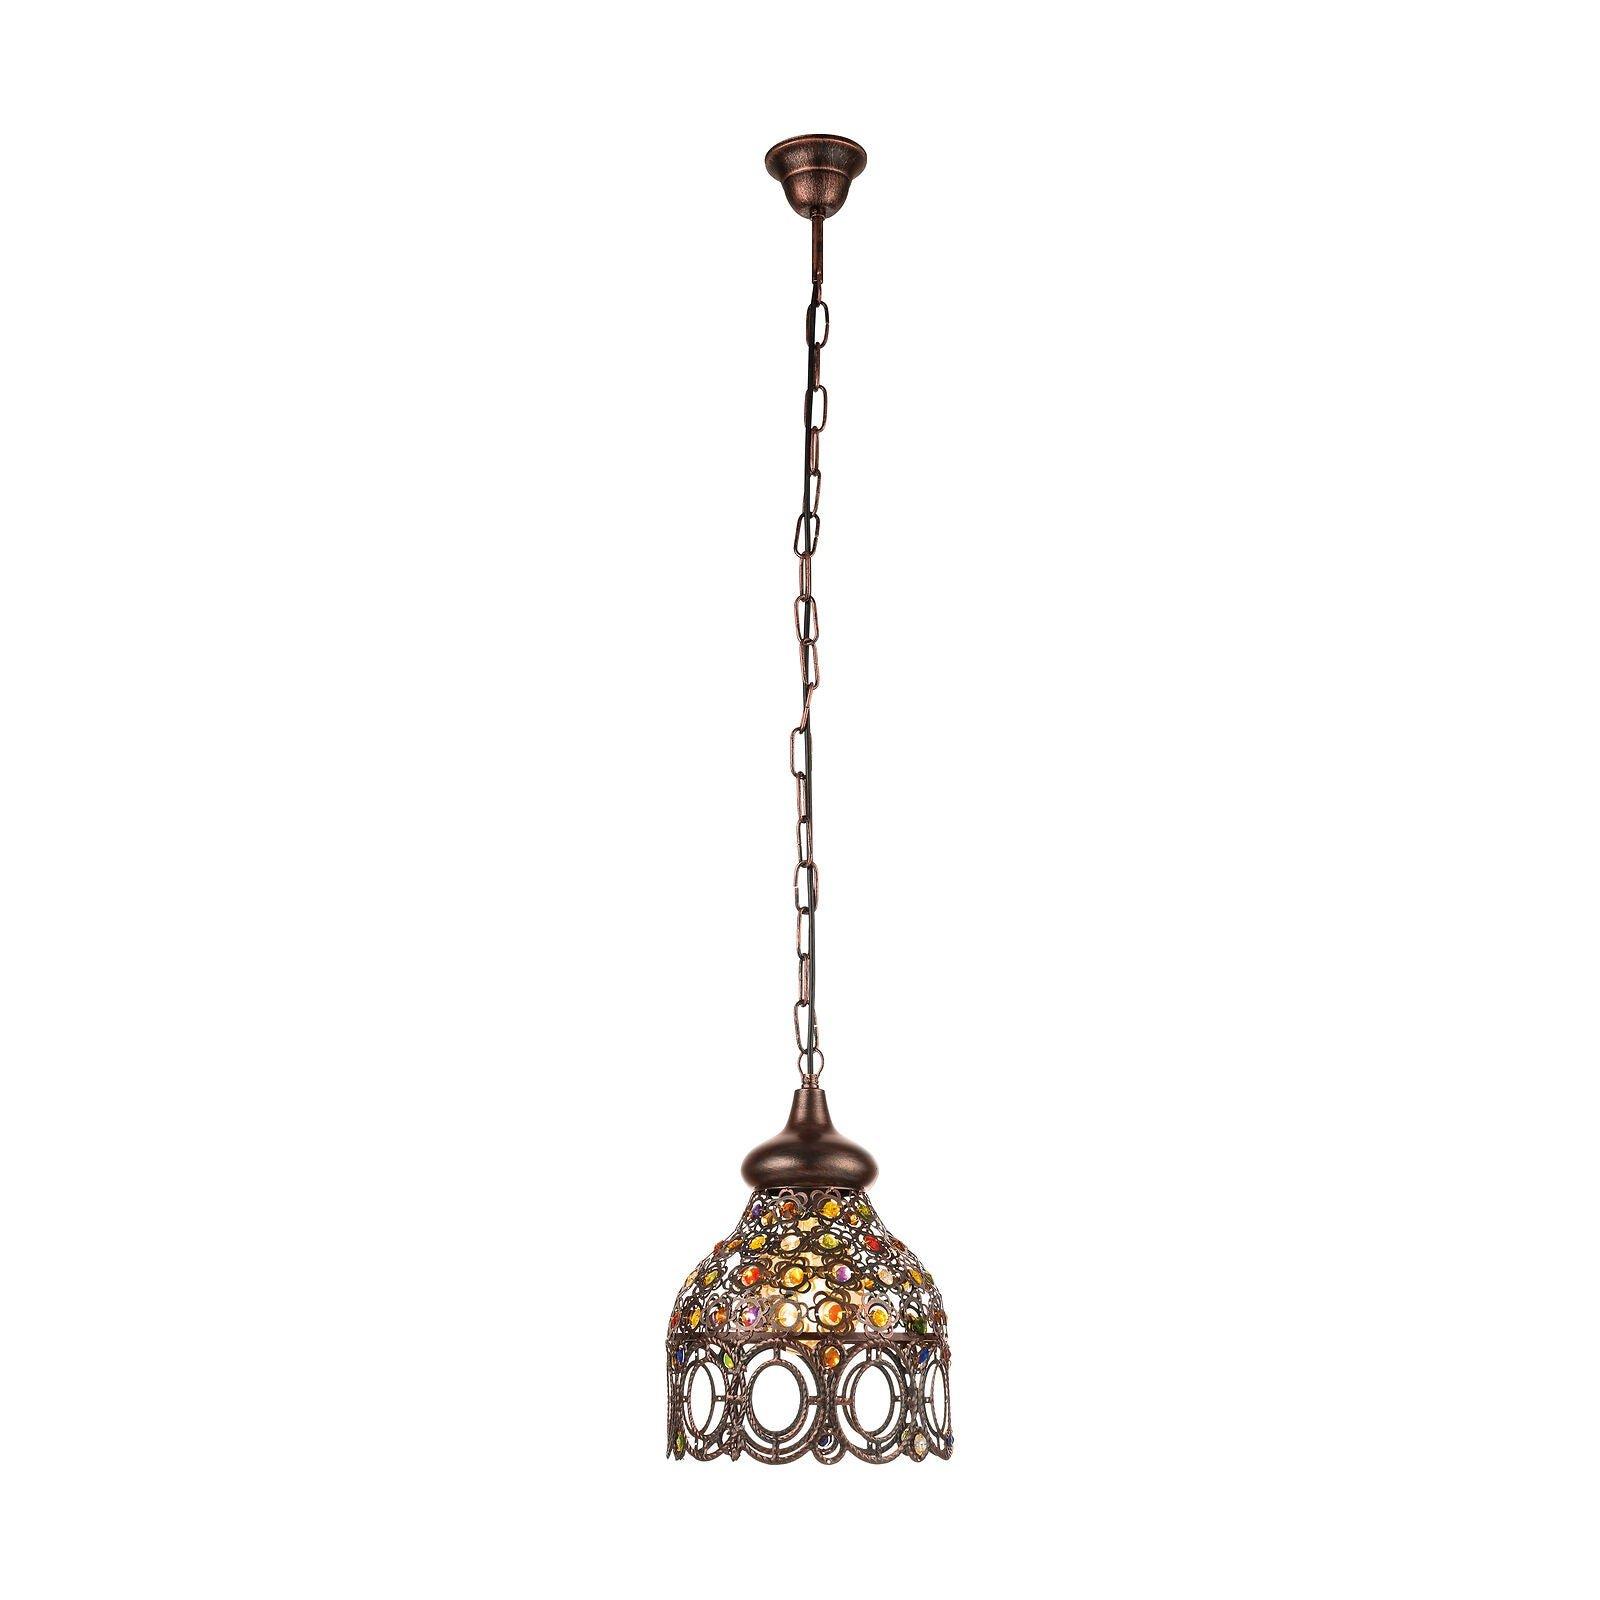 Hanging Ceiling Pendant Light Antique Copper & Coloured Glass 1x 60W E27 Bulb